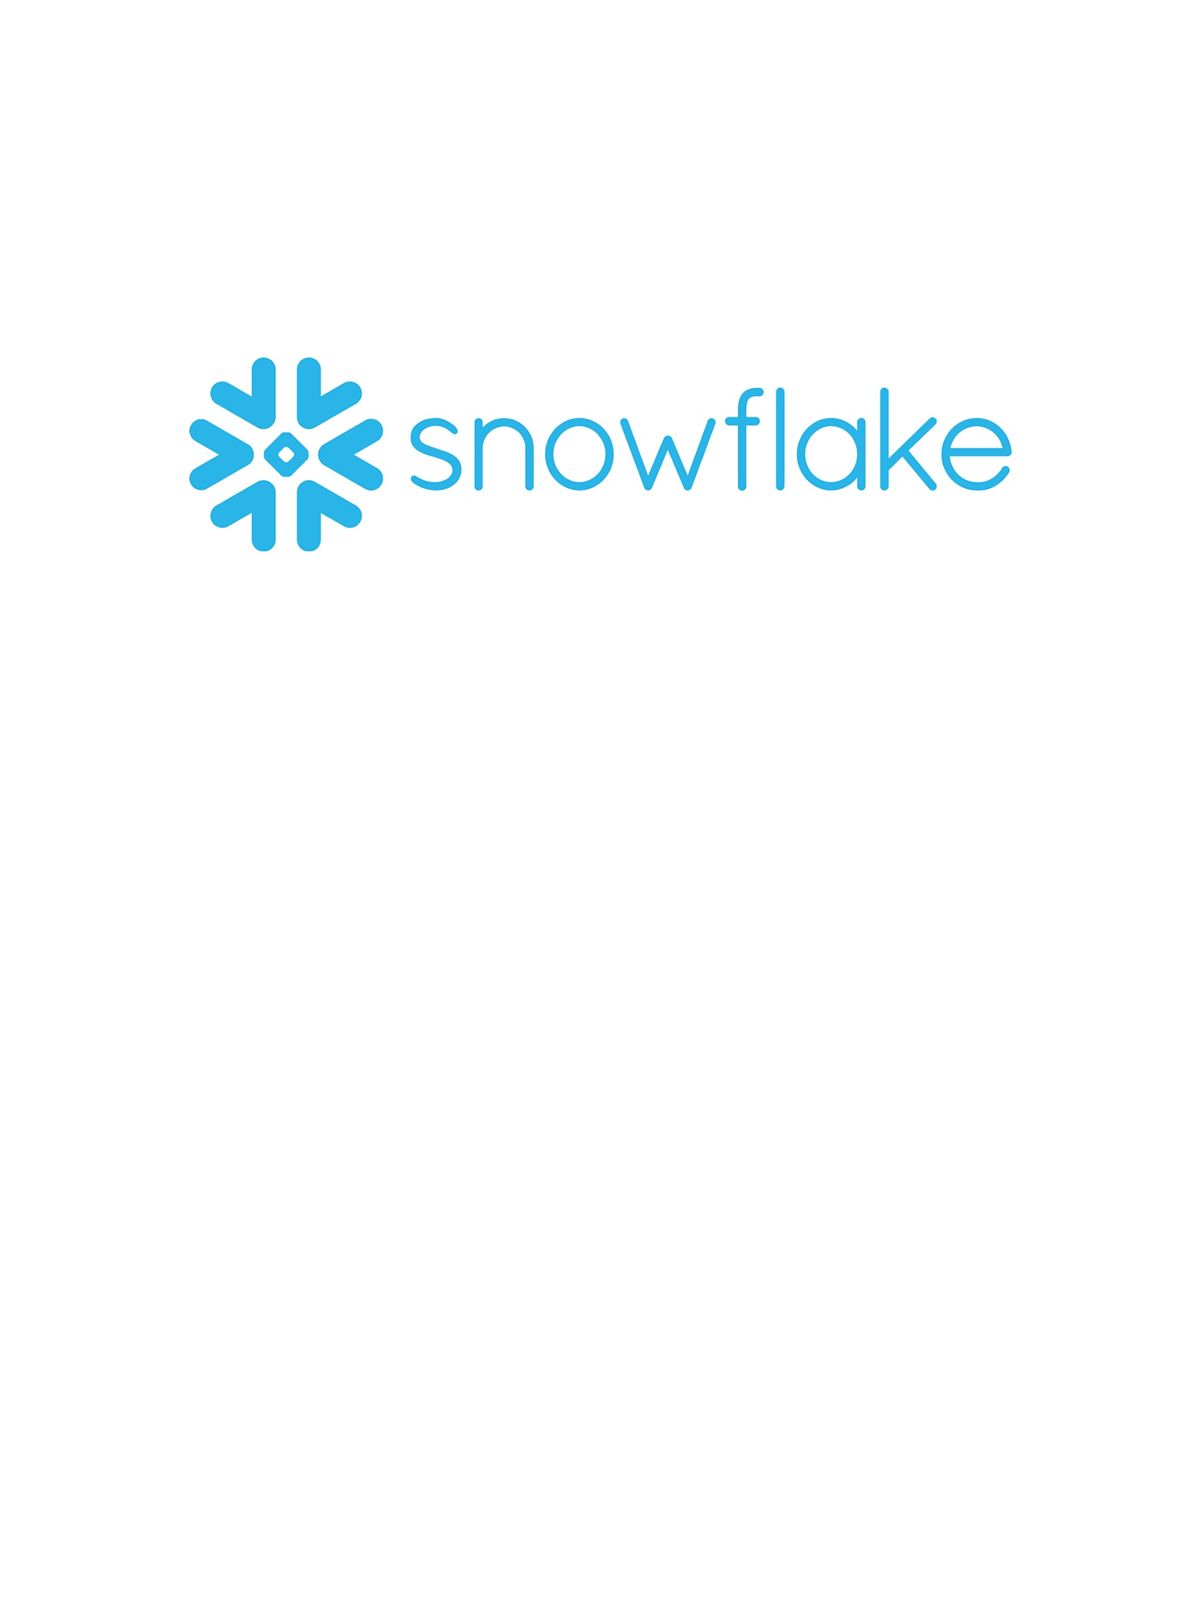 4 Weeks Snowflake cloud data platform Training Course Wilmington